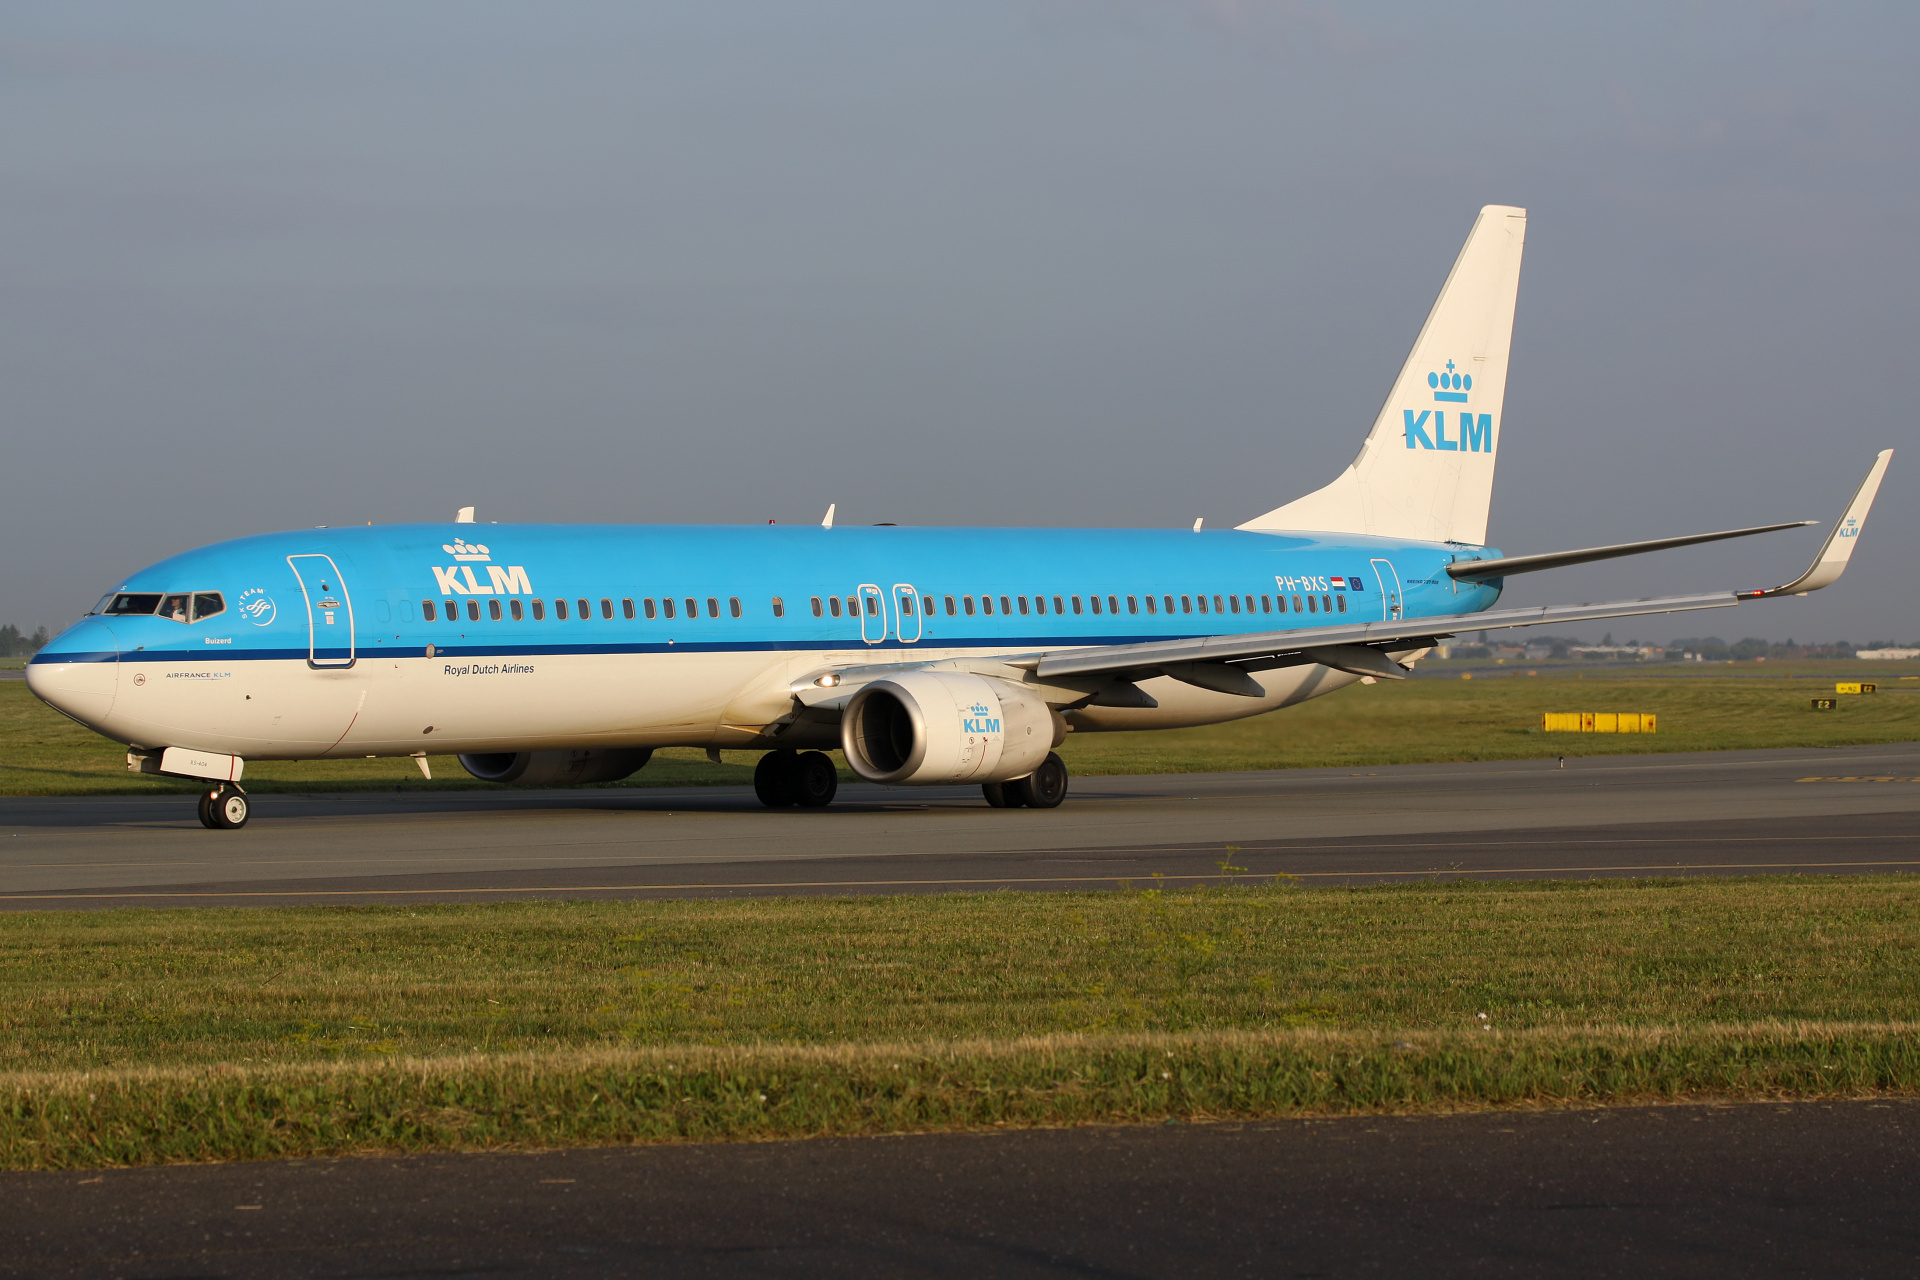 PH-BXS (Aircraft » EPWA Spotting » Boeing 737-900 » KLM Royal Dutch Airlines)